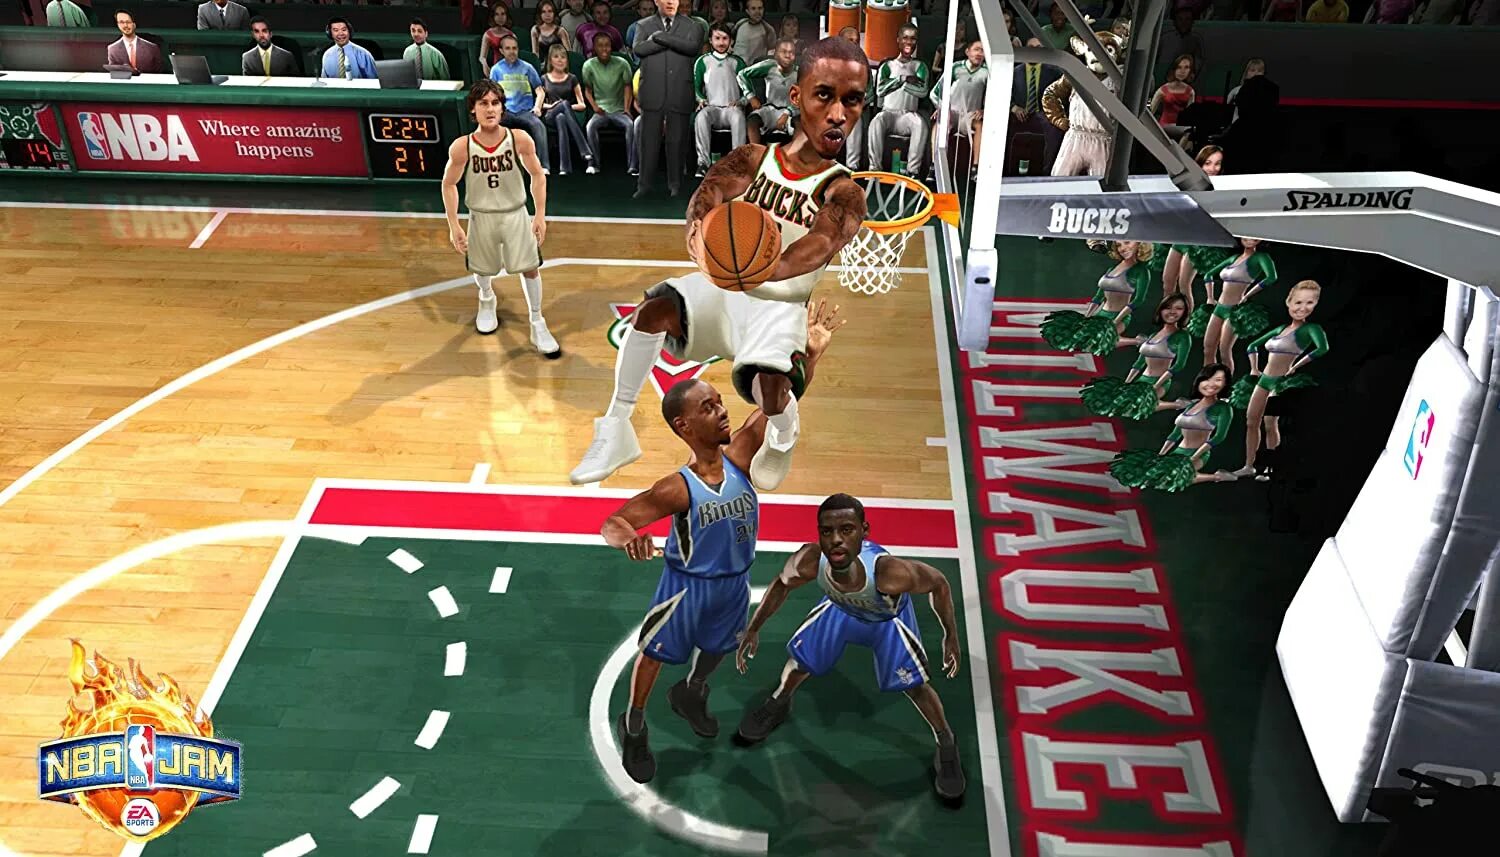 Amazing happens. НБА джэм. NBA Jam ps3 управление. Игра NBA Jam ps3. NBA Jam (2010 Video game).